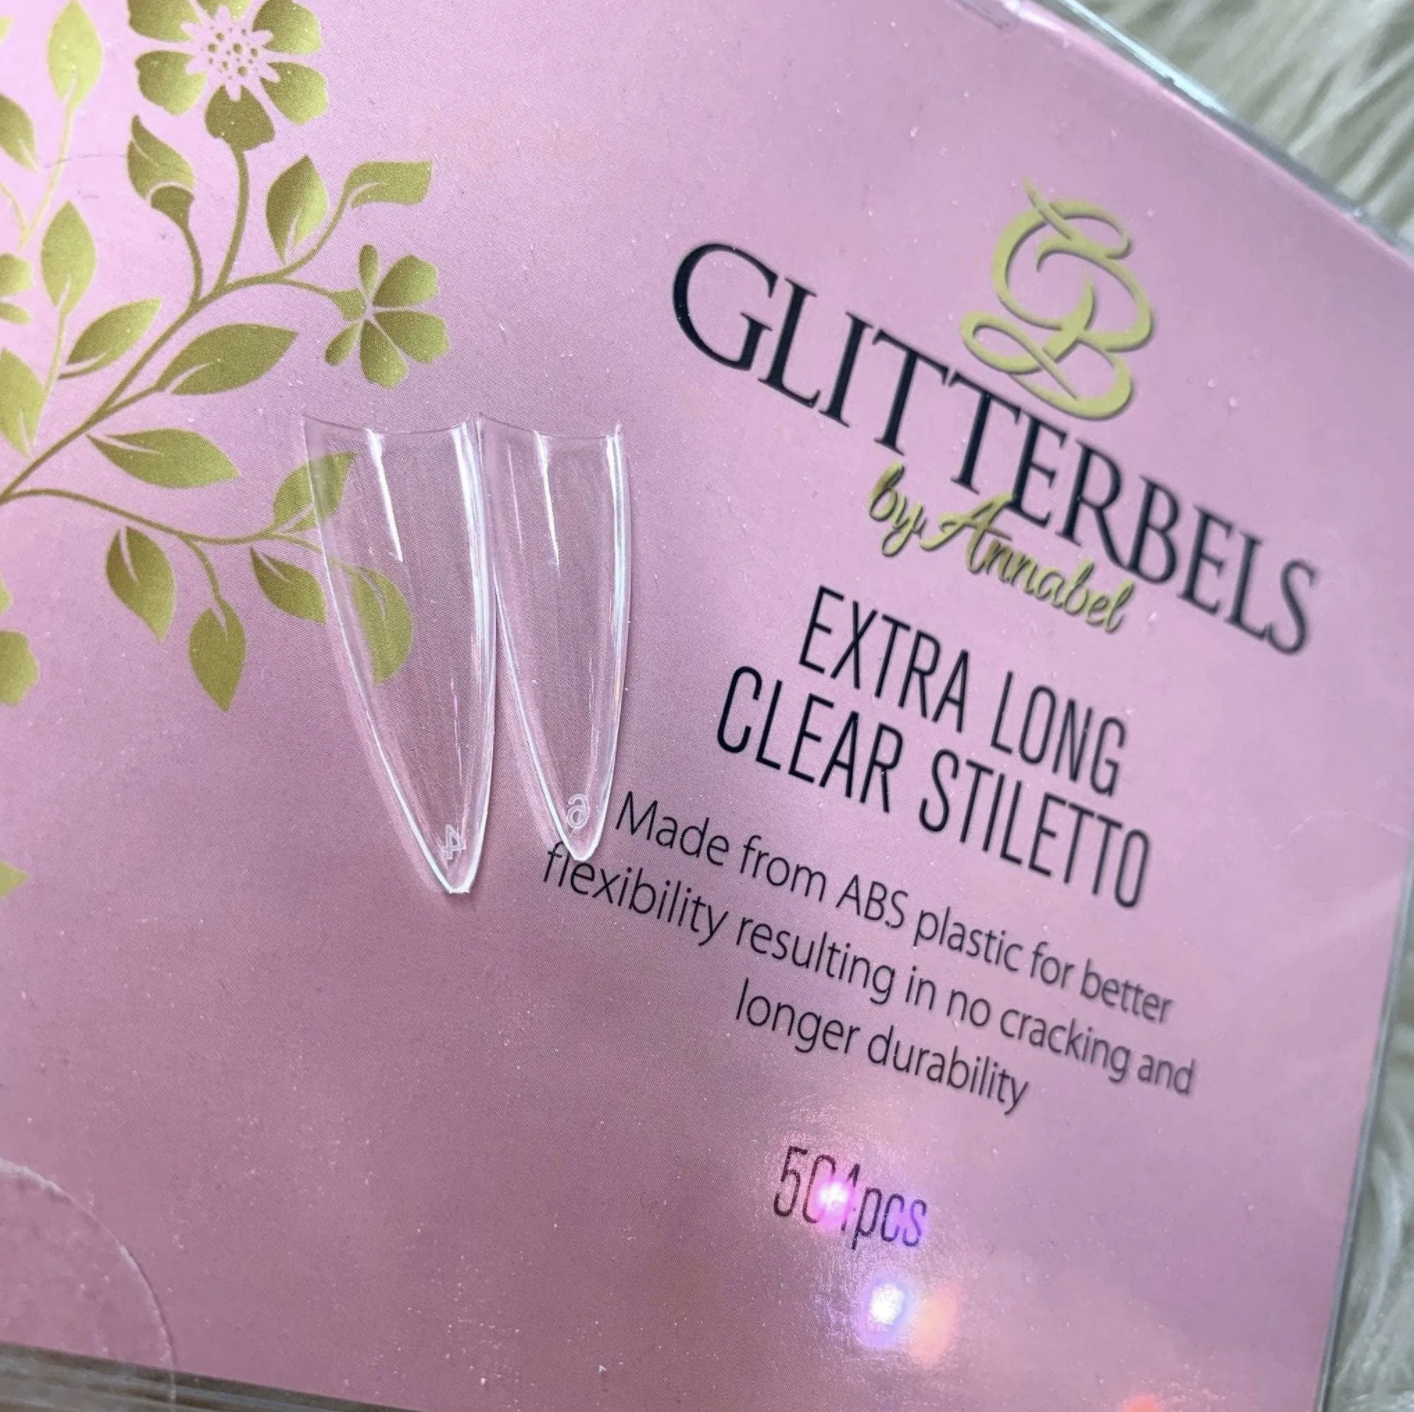 Glitterbels Extra Long Clear Stiletto Tipper - REFILL